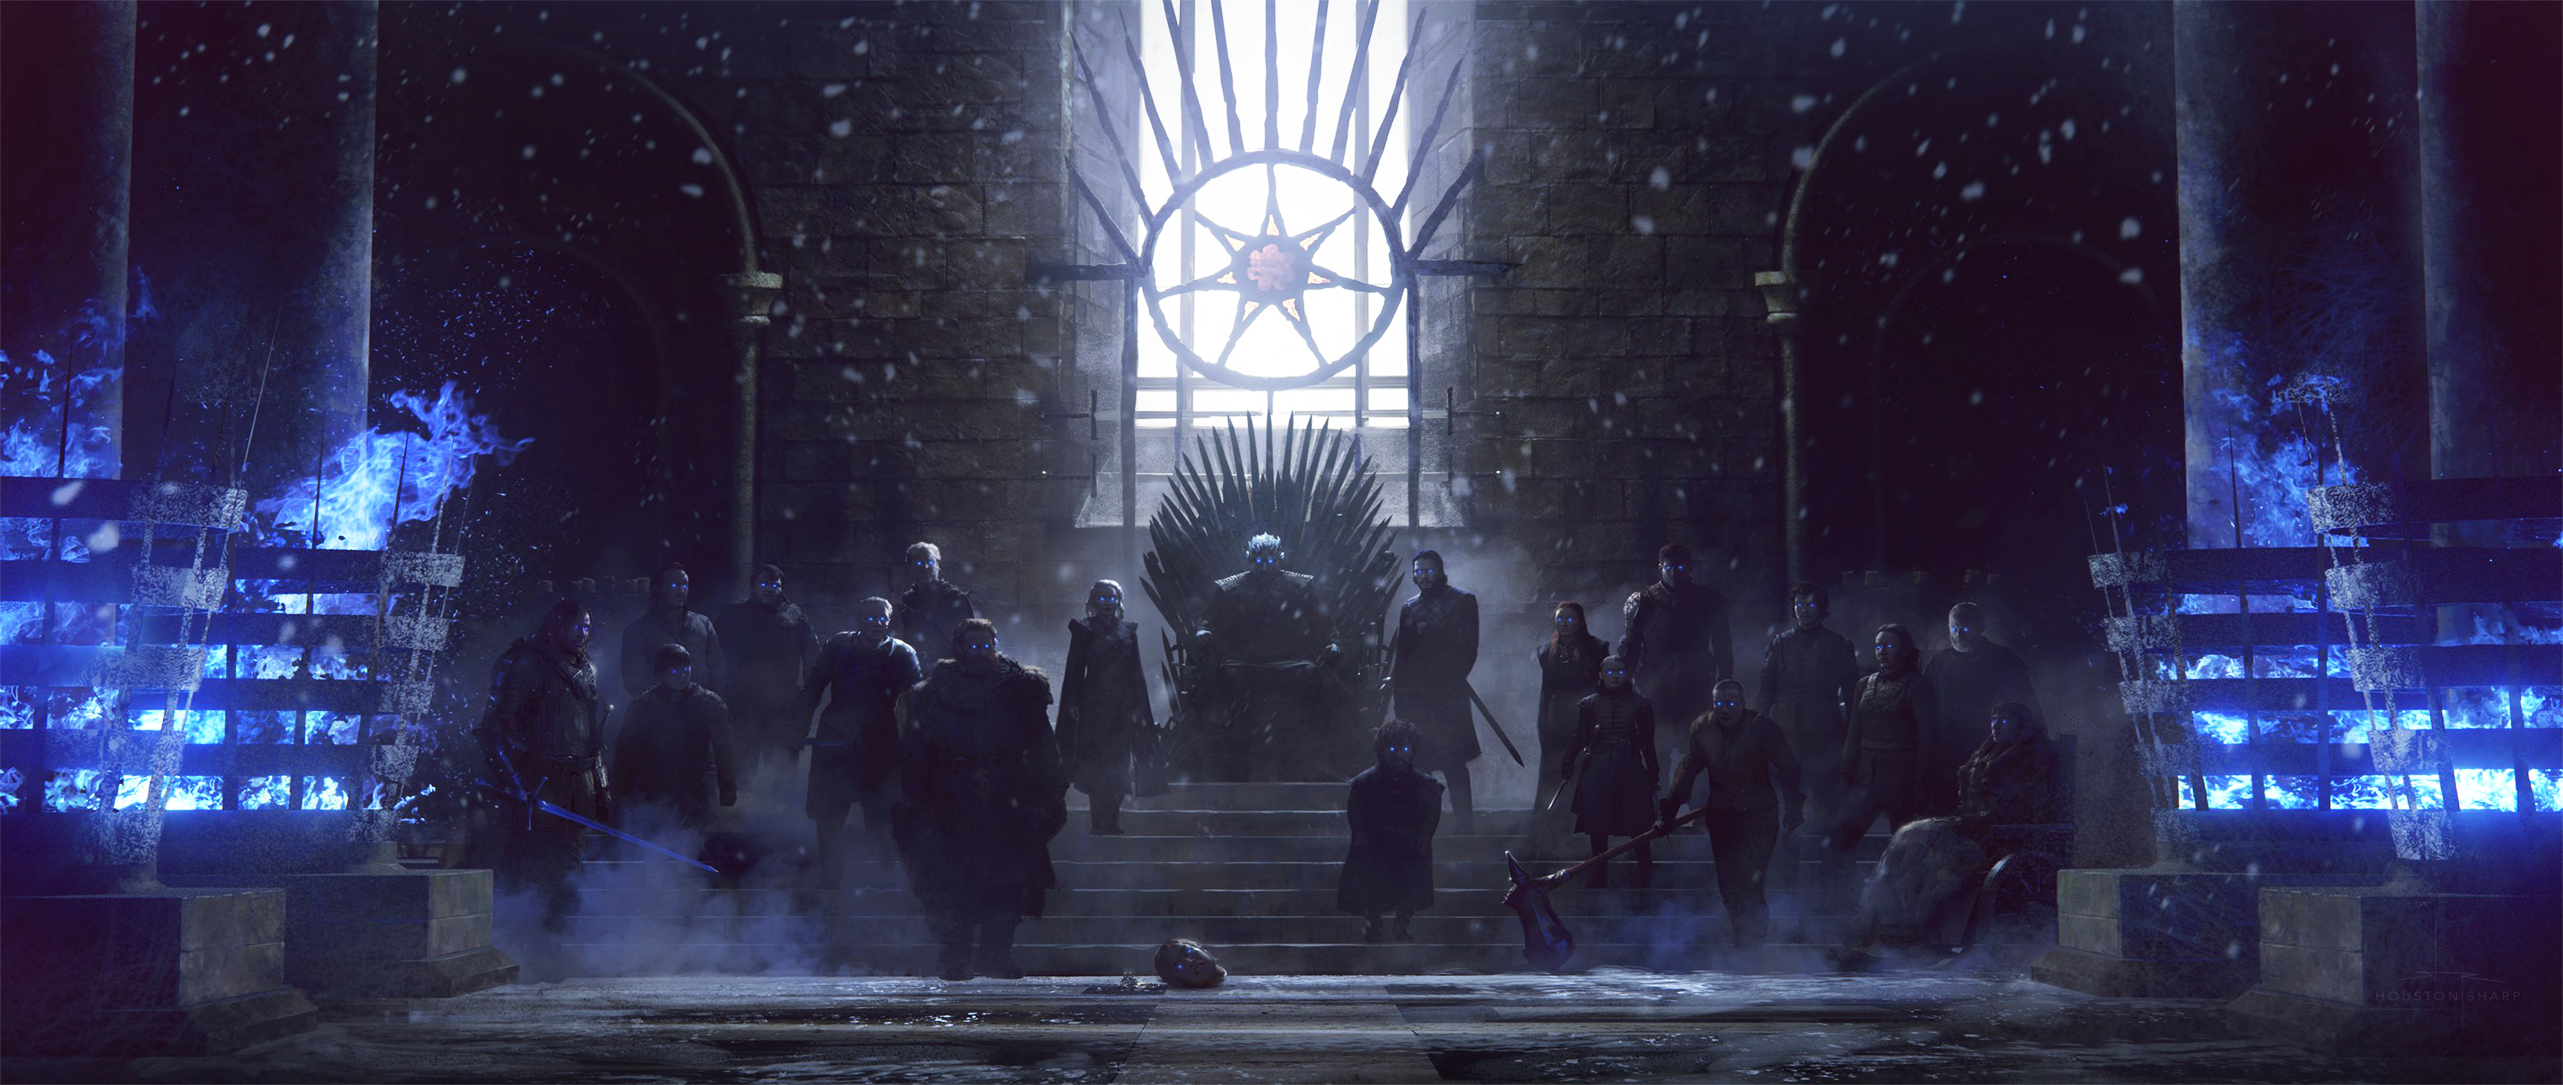 Night King On Throne - HD Wallpaper 